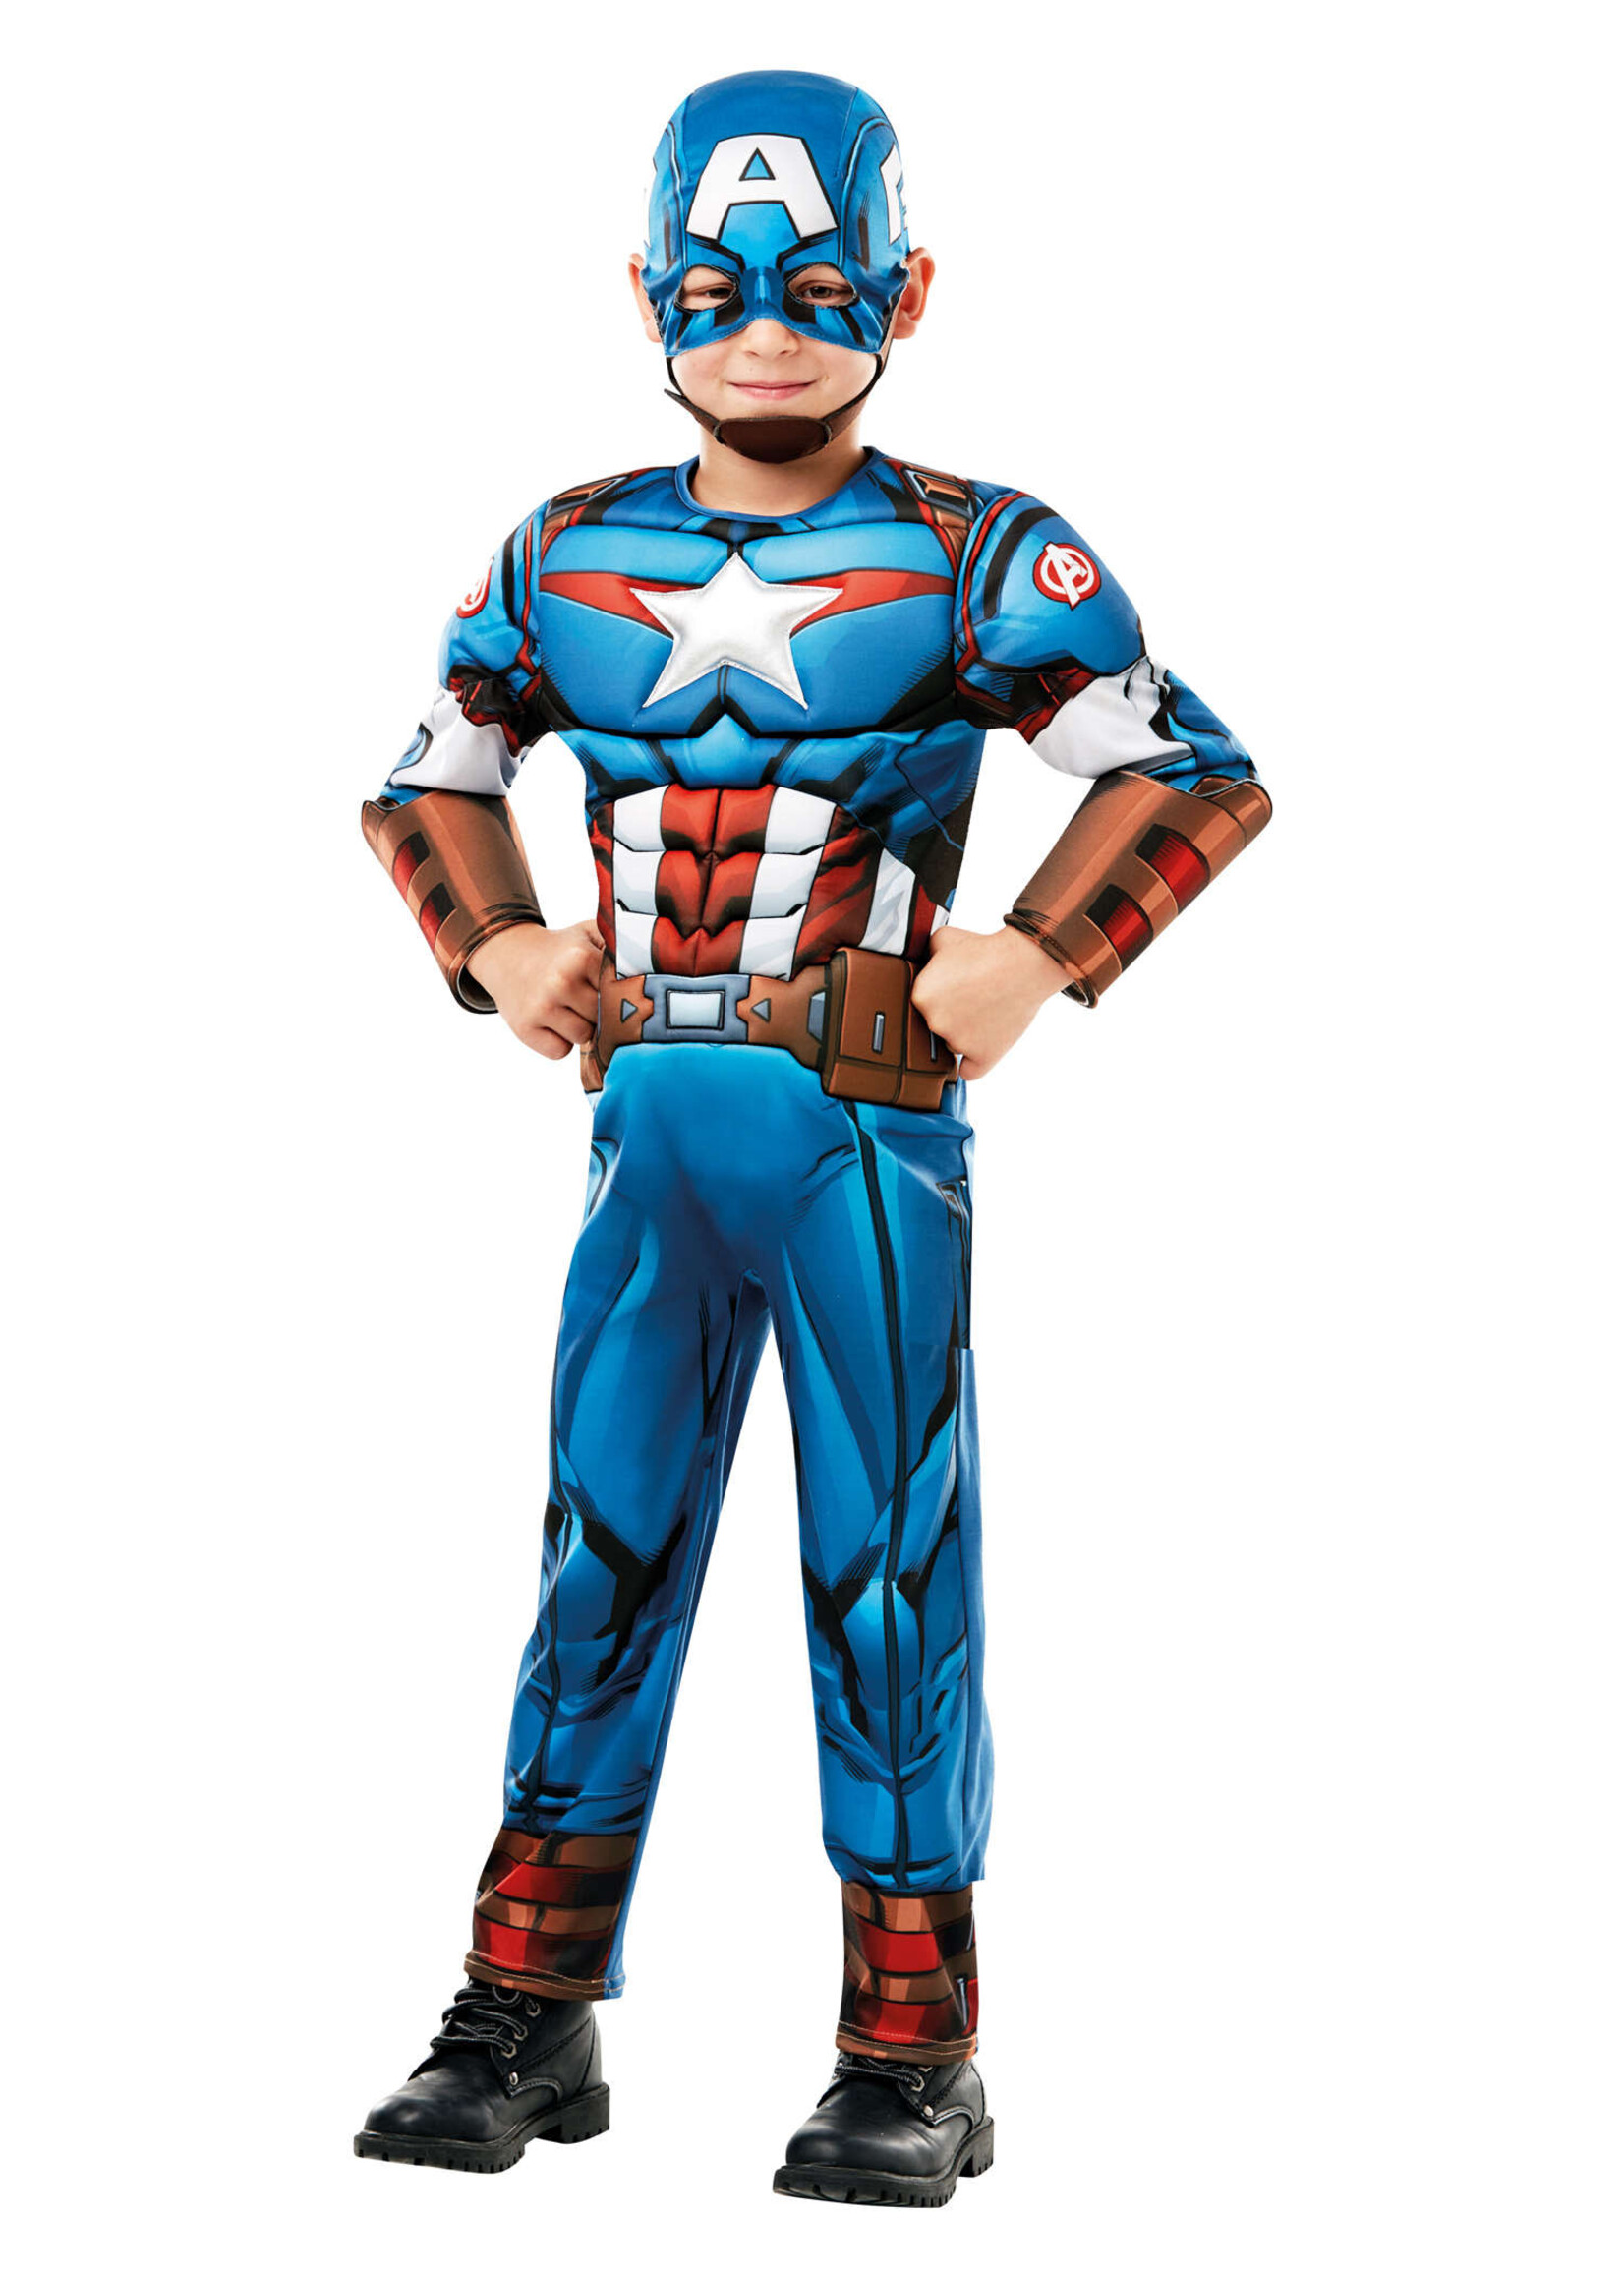 Feestkleding Breda Captain America Klassiek Kostuum Kind